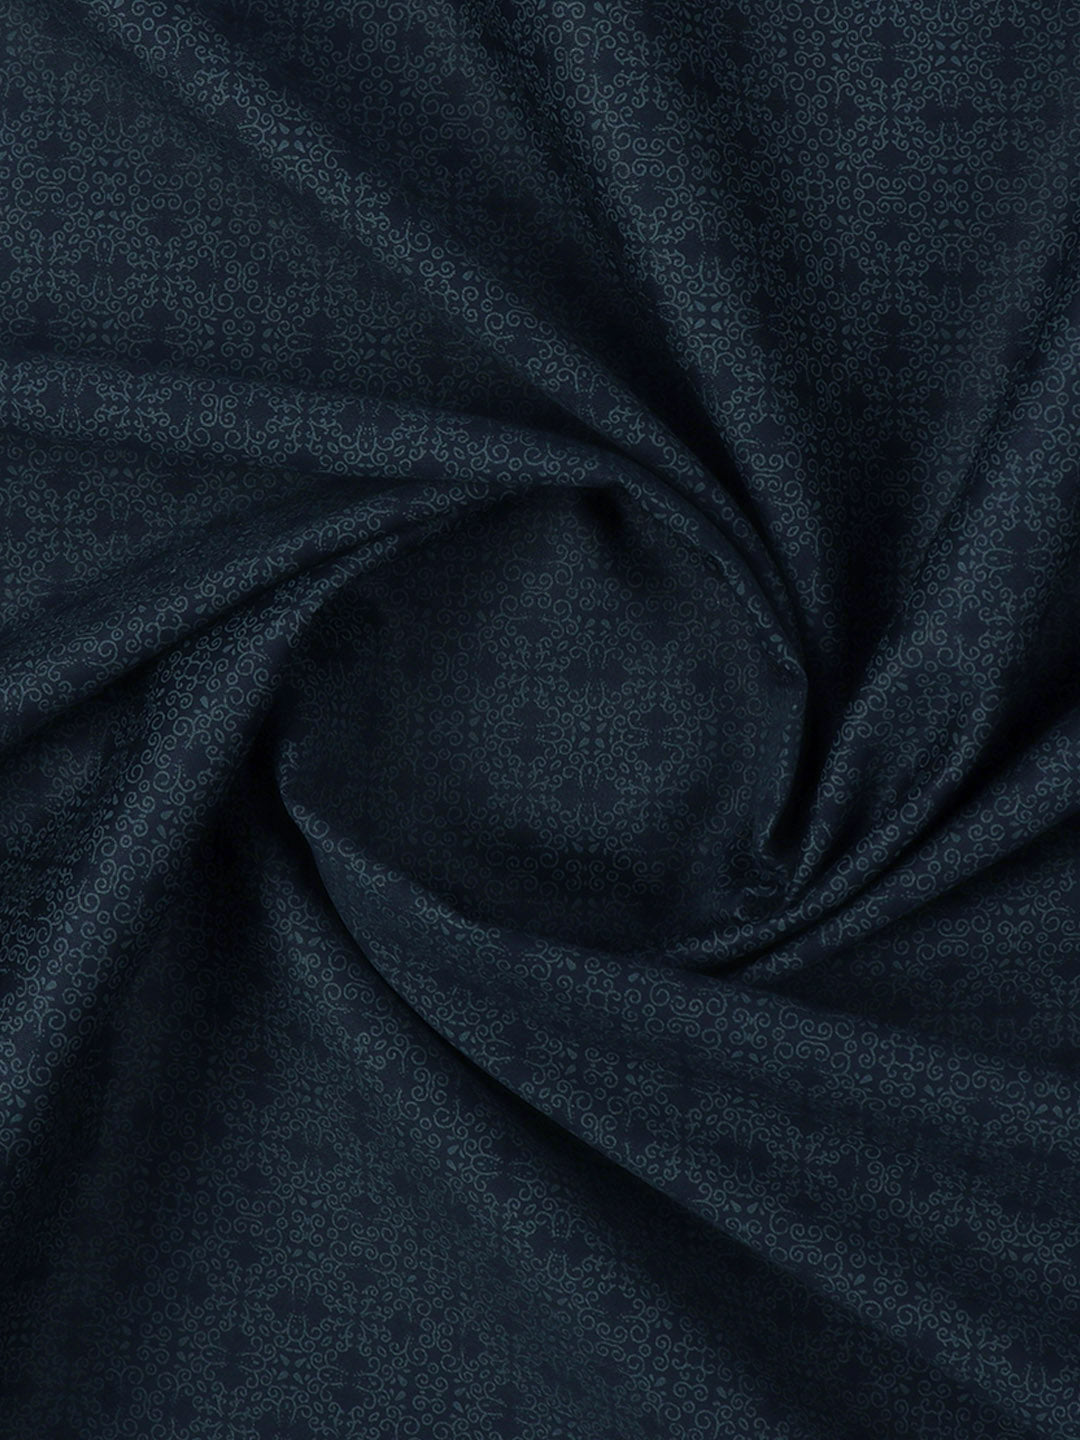 100% Premium Cotton Radiant Print Navy Colour Shirt Fabric - OSLO